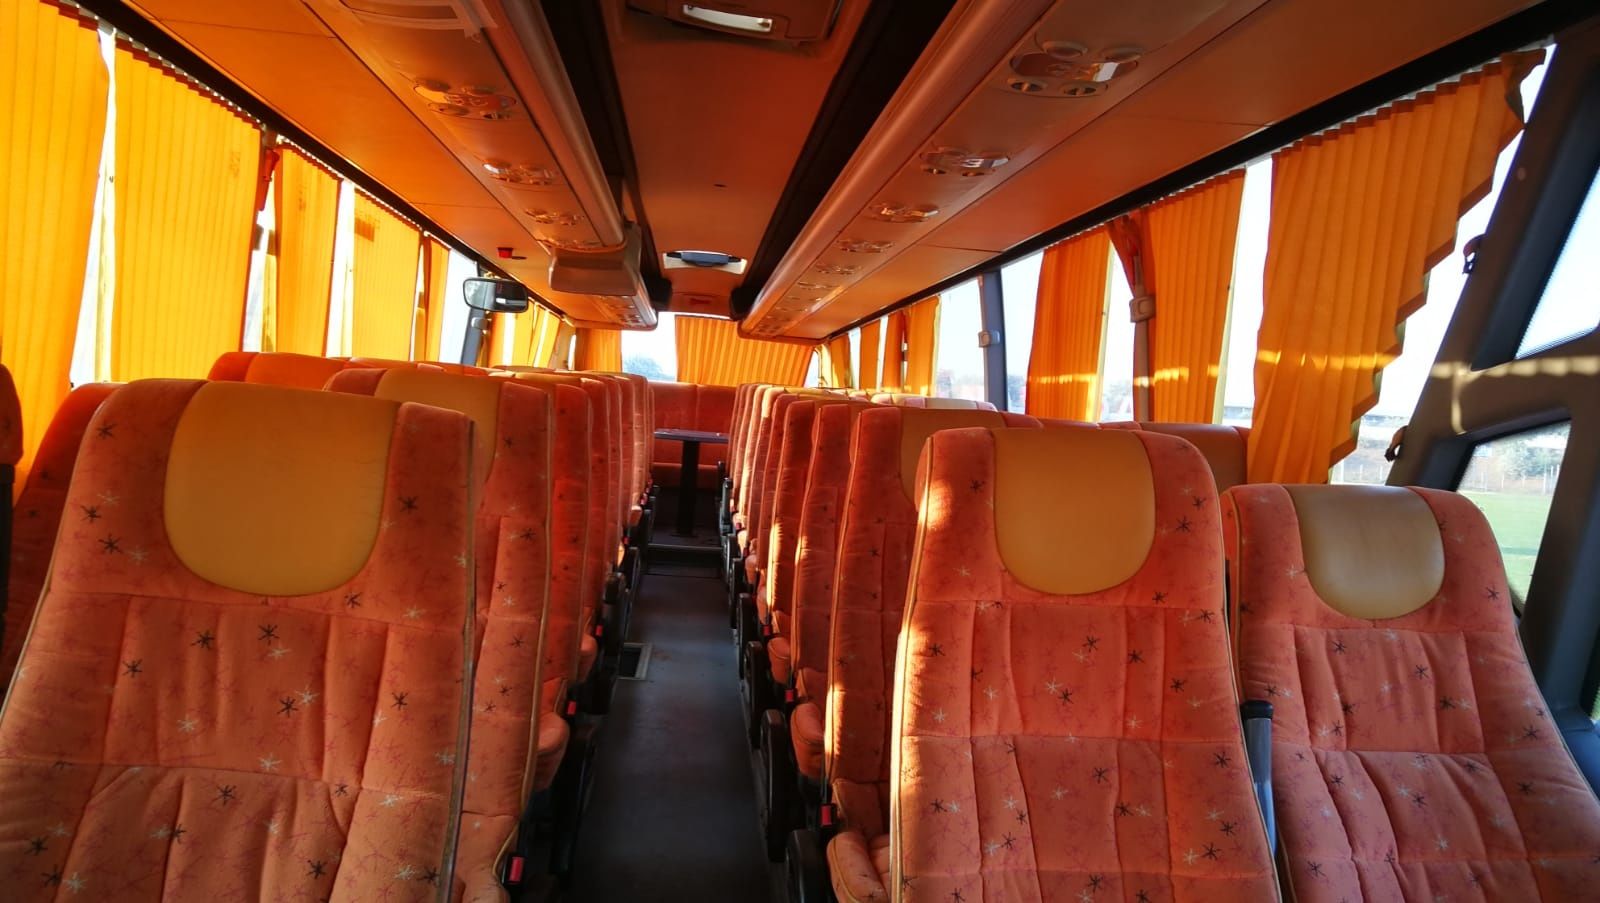 Inchirieri Microbuz Autocar Transport Persoane,Transport Muncitori